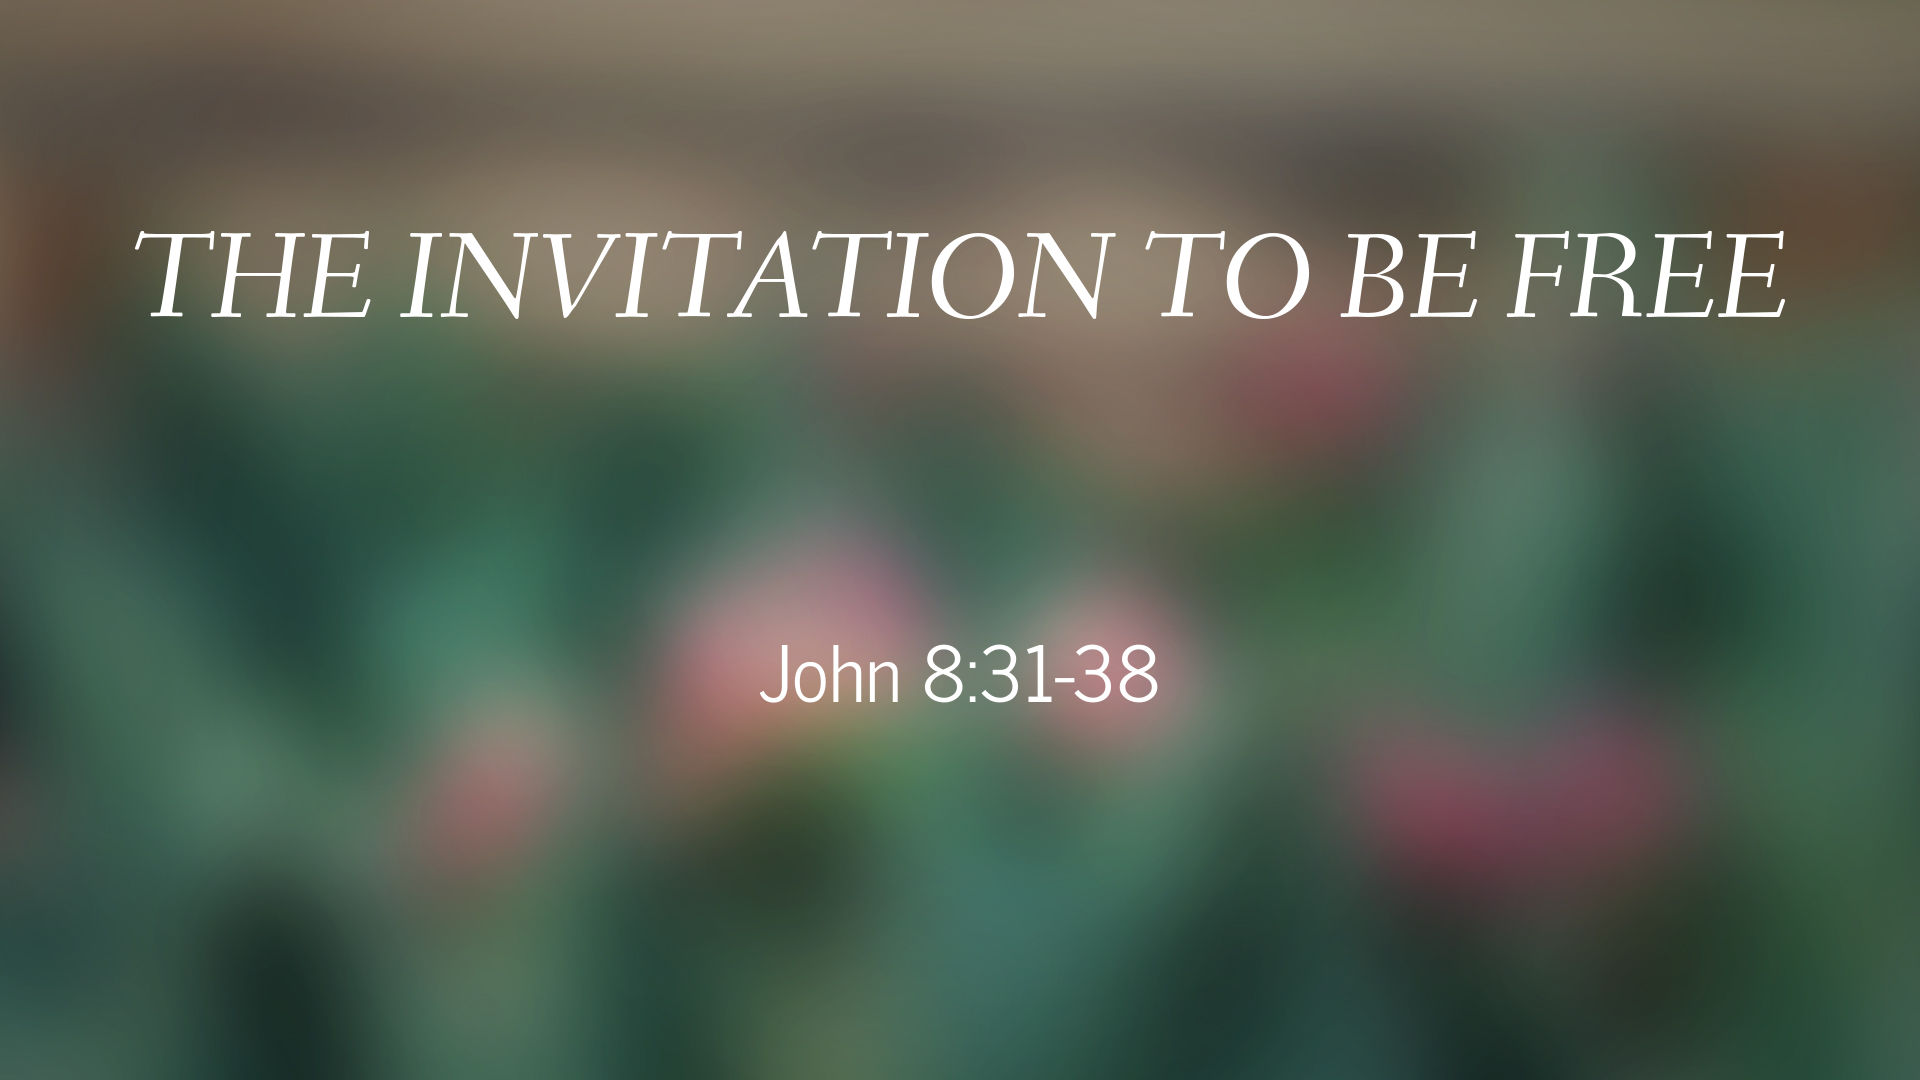 May 03, 2020 - The Invitation to Be Free (Video) John 8:31-38